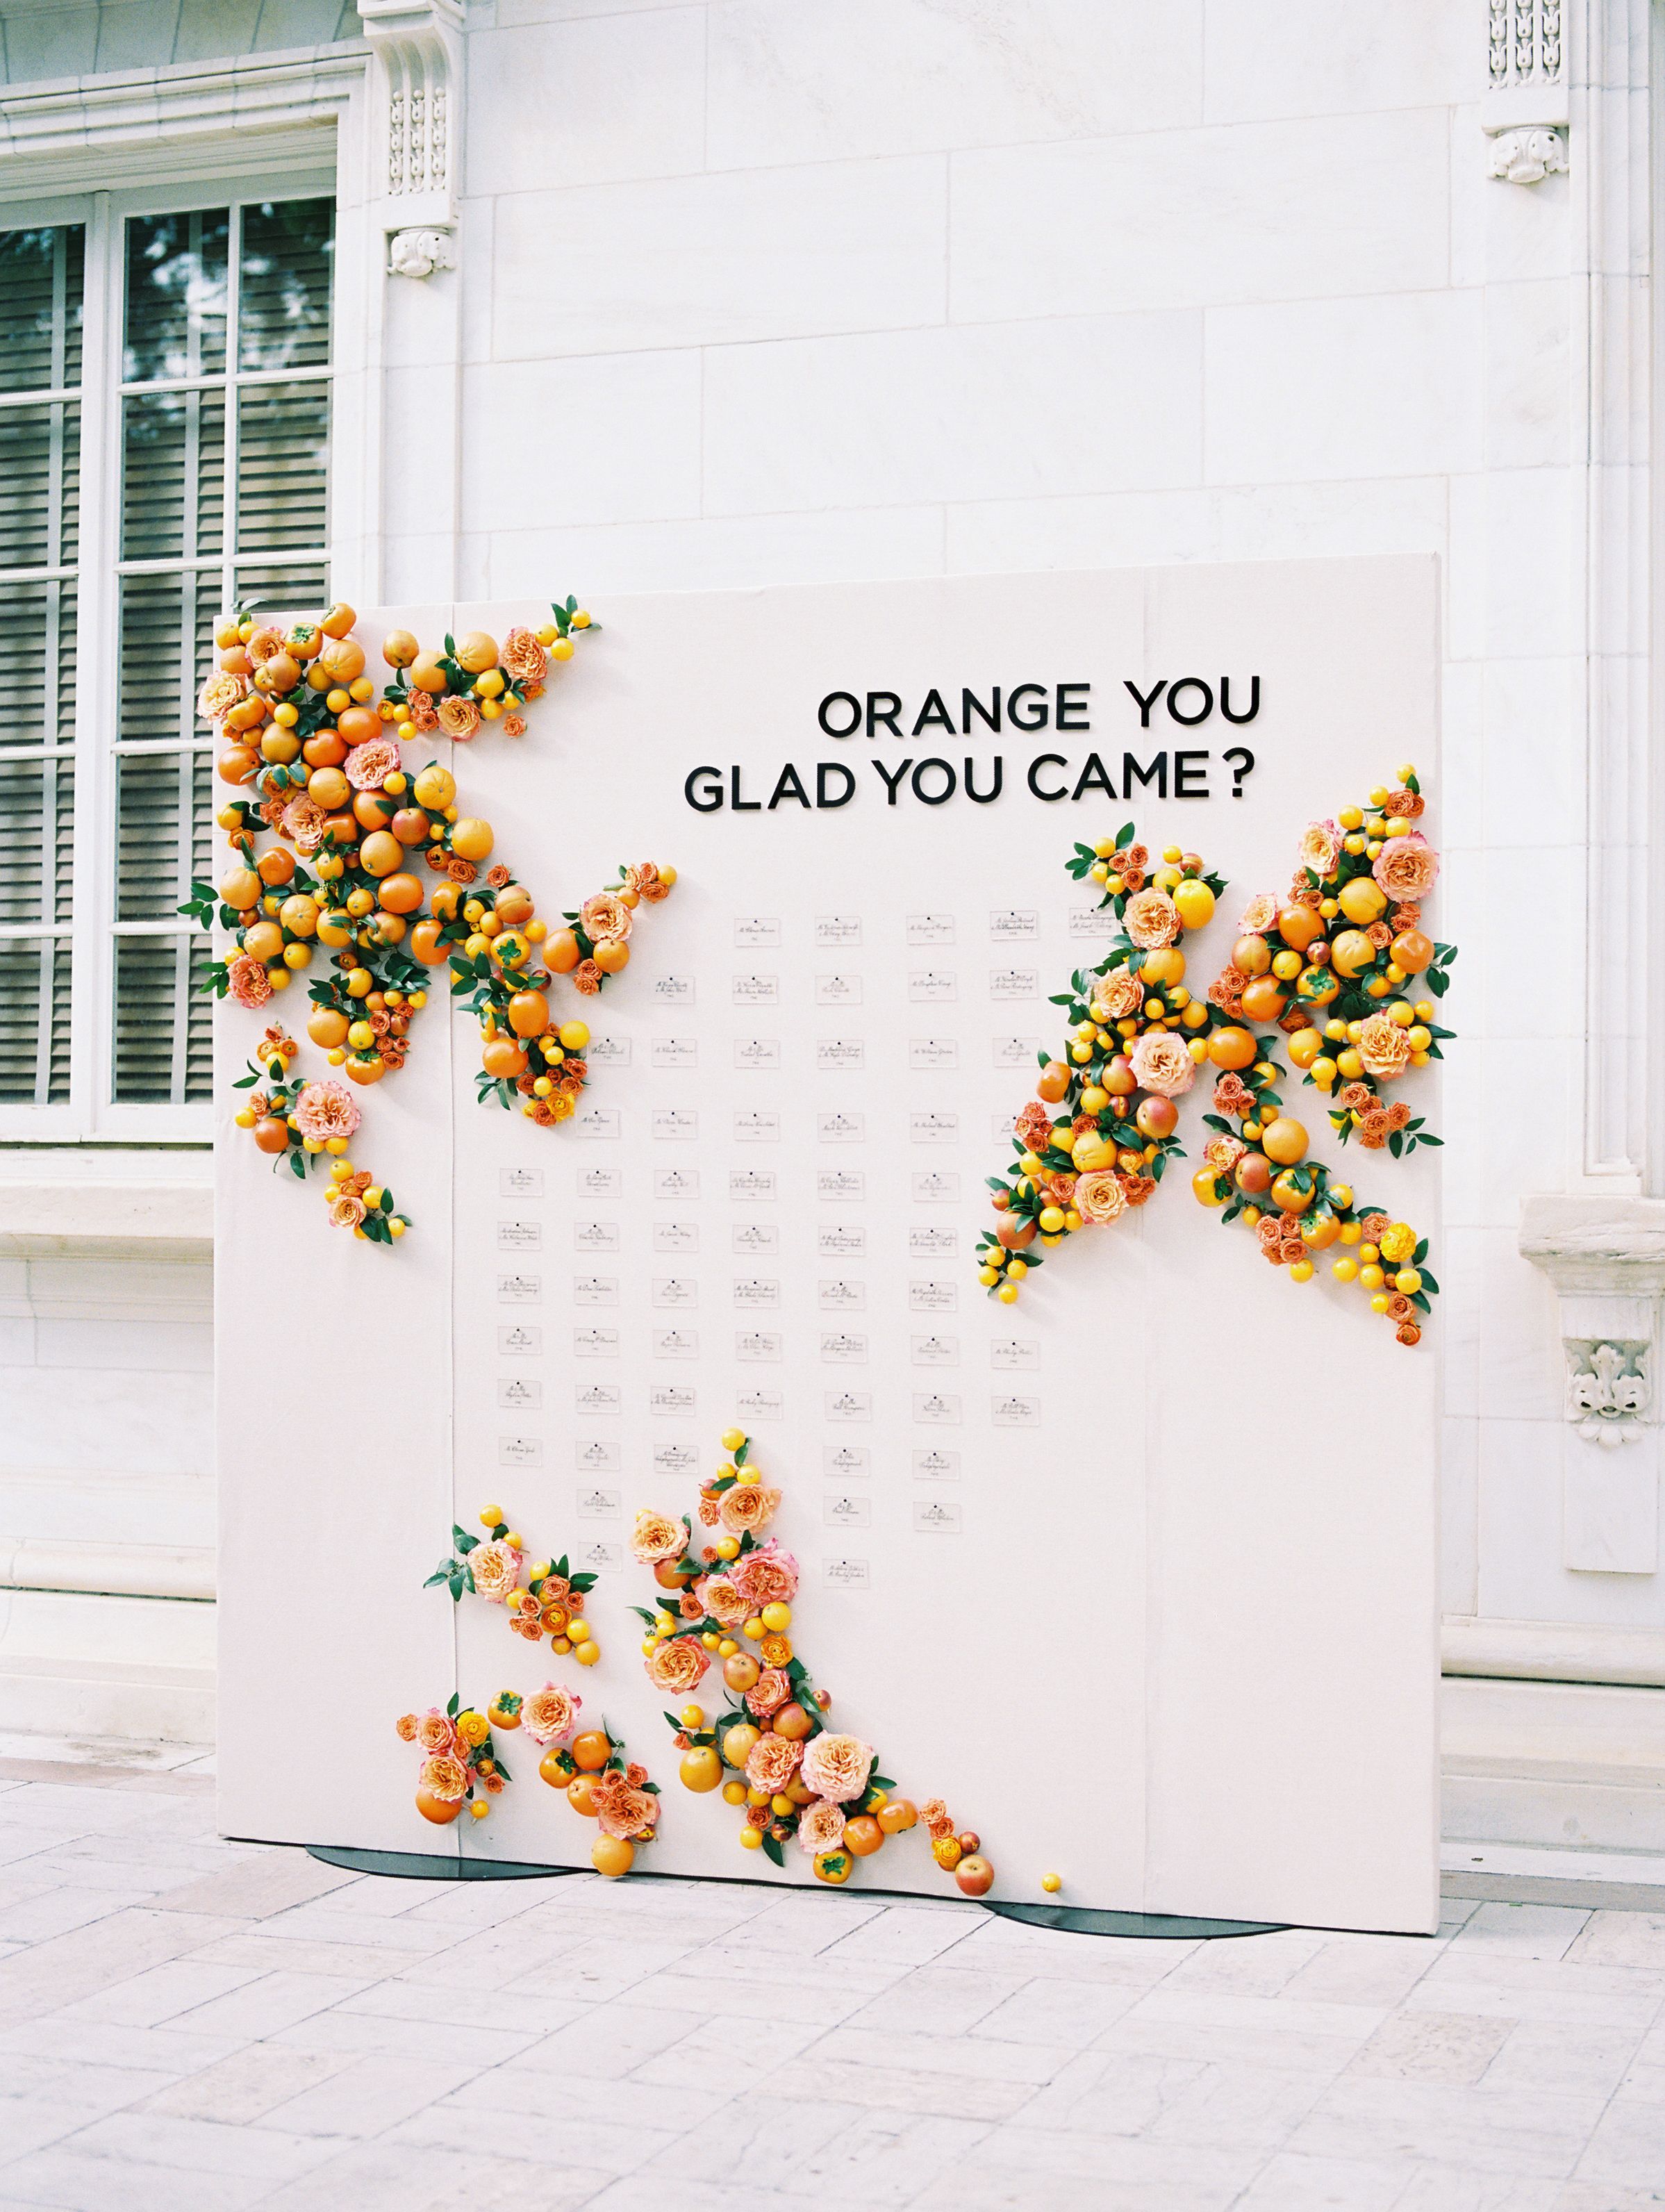 Modern Citrus Wedding at DAR in Washington, DC - Sweet Root Village Blog -   18 wedding Design summer ideas